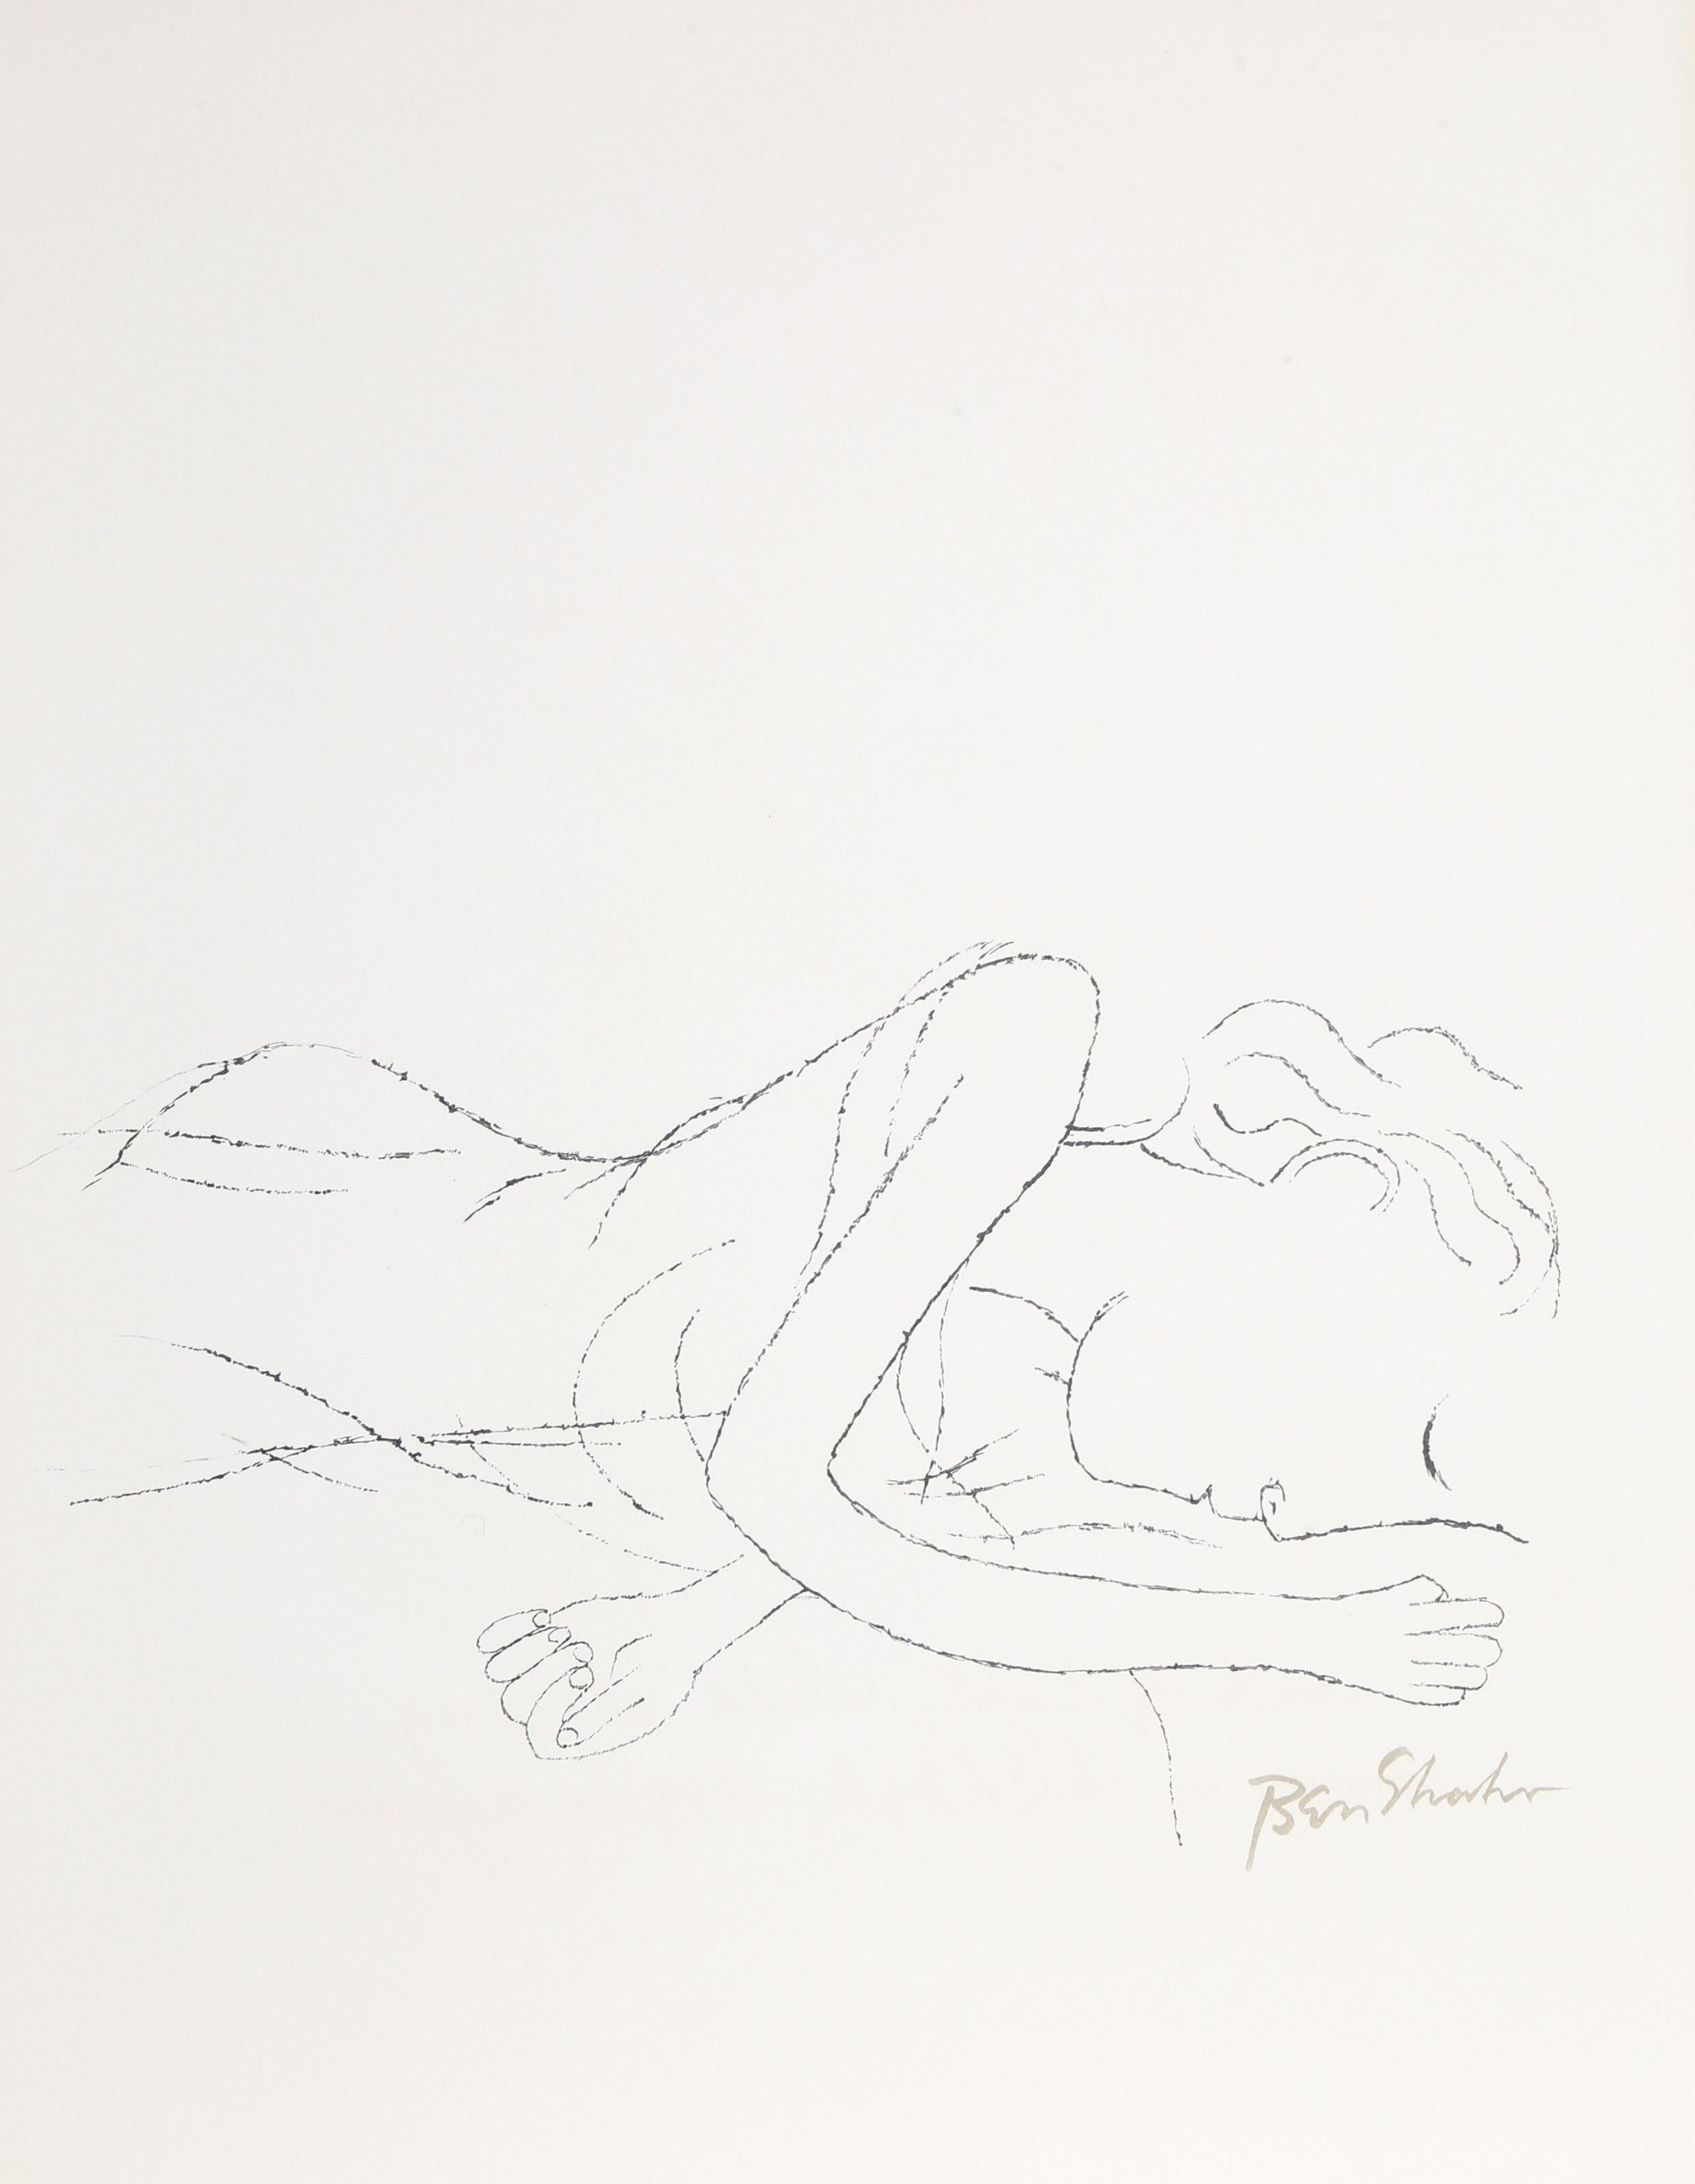 Of Light, White Sleeping Women from the Rilke Portfolio, lithograph by Ben Shahn